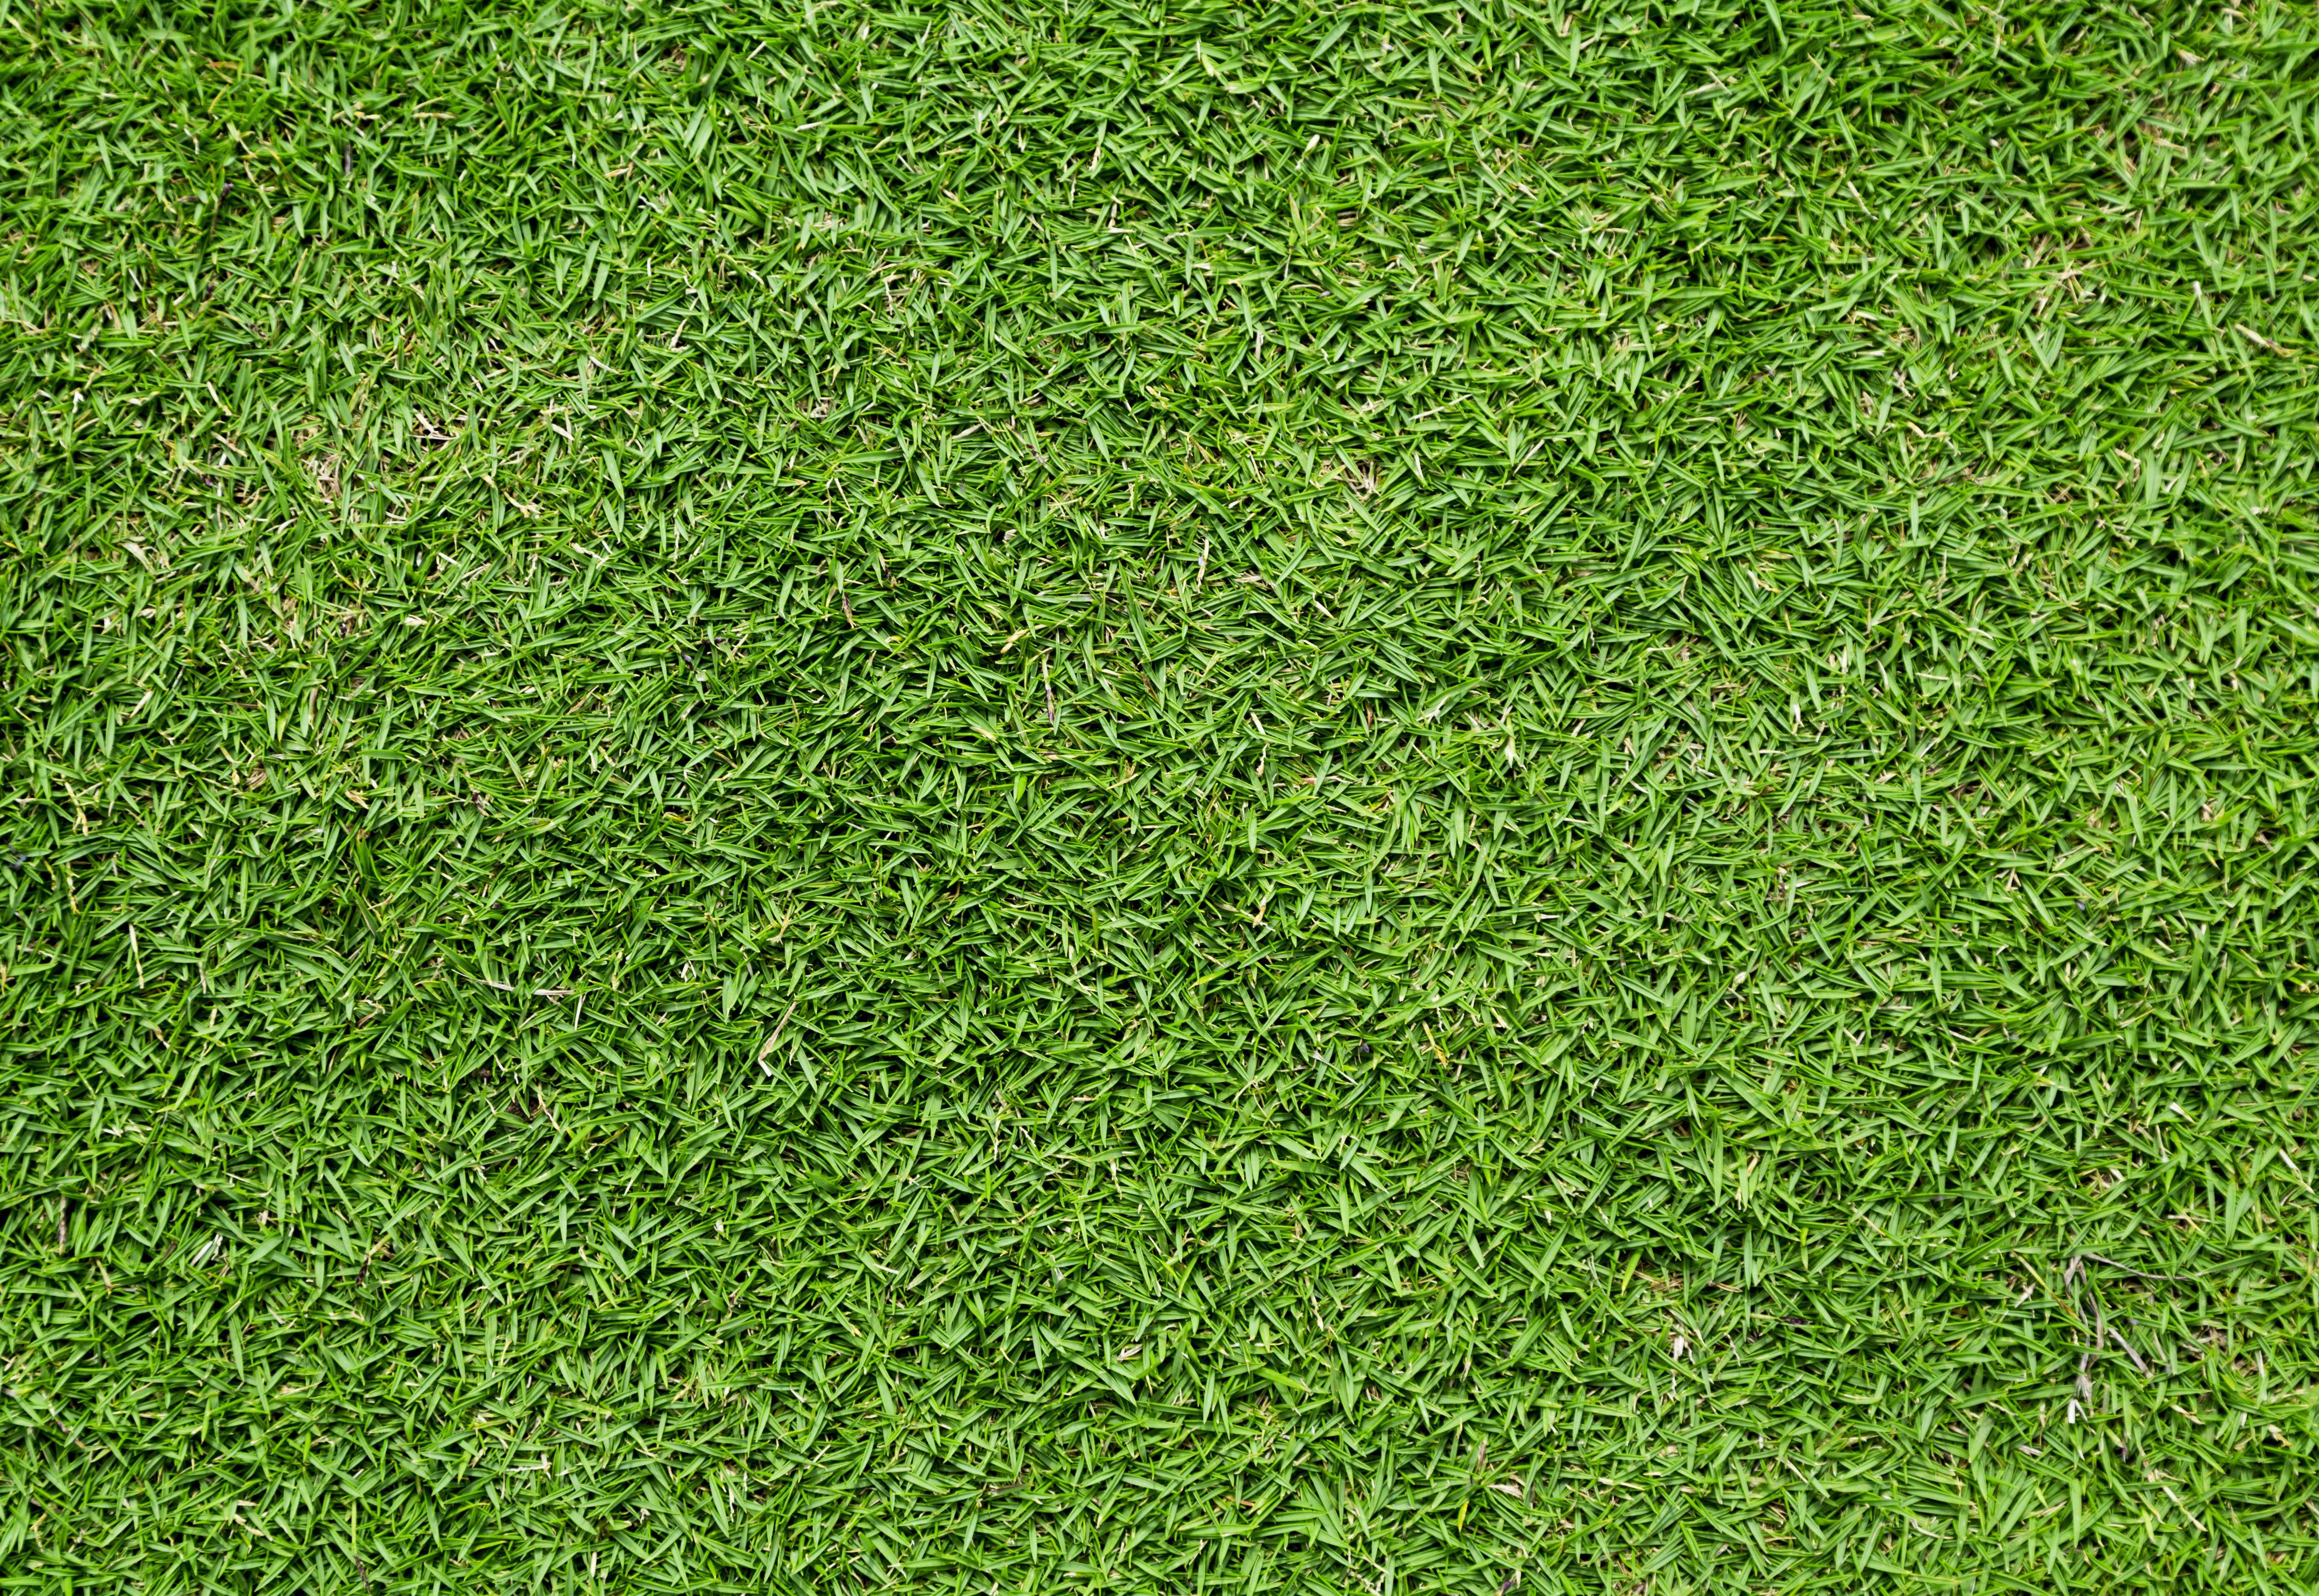 Earth Grass wallpaper (Desktop, Phone, Tablet) Desktop